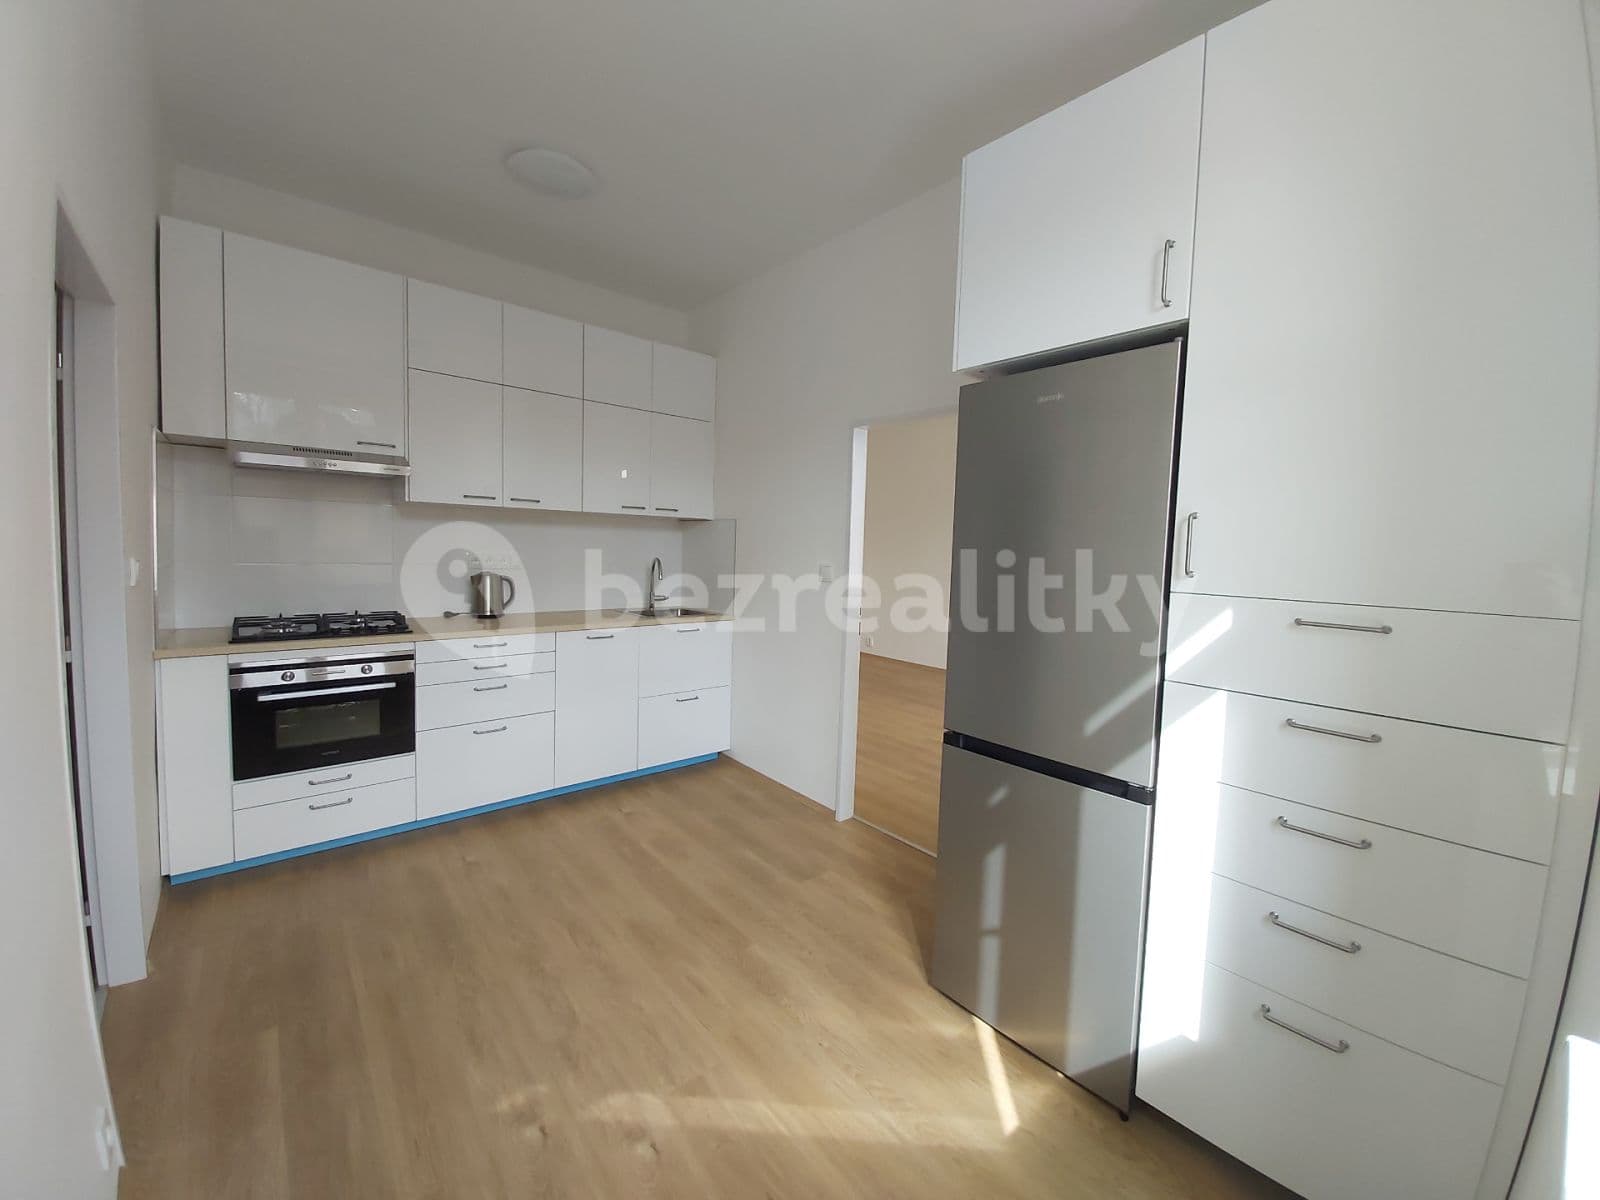 2 bedroom flat to rent, 48 m², Sokolovská, Prague, Prague